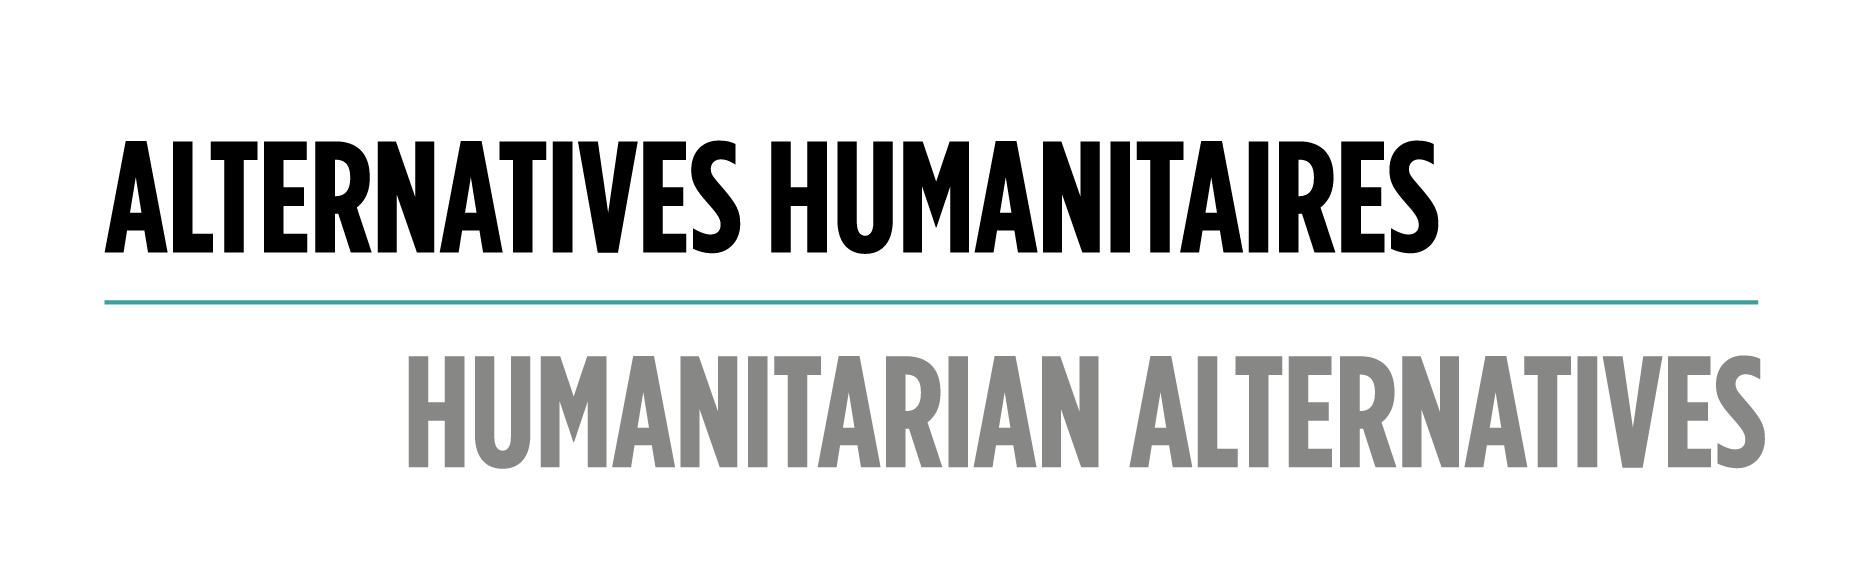 Alternatives Humanitaires